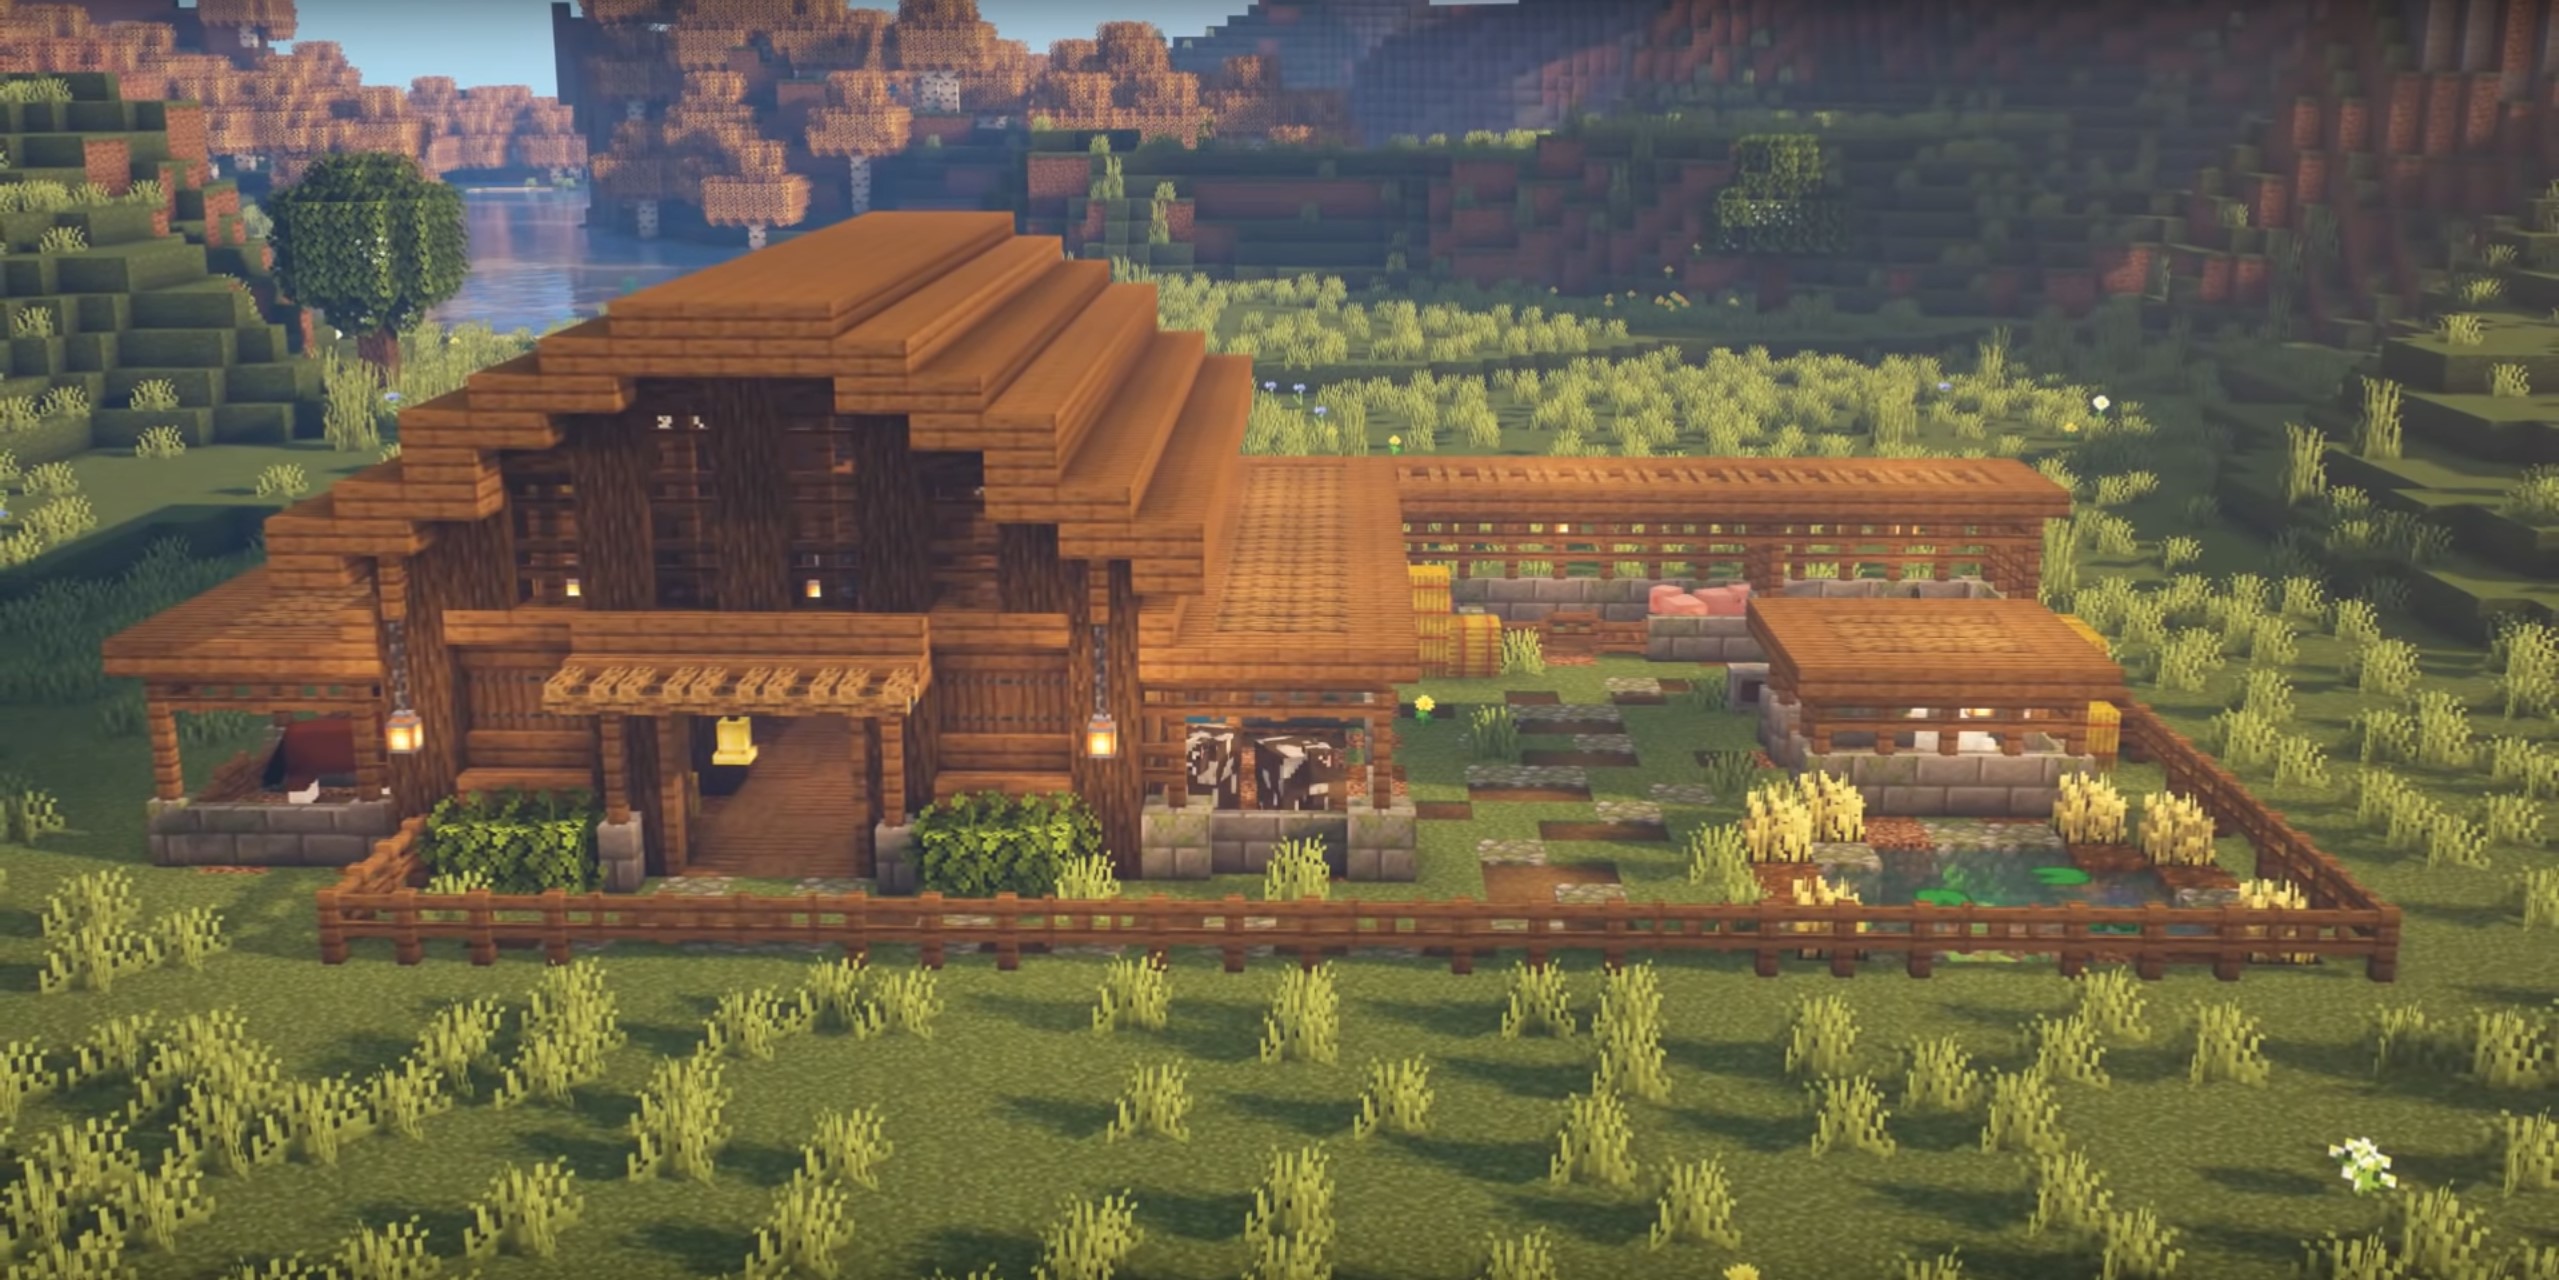 Minecraft Barn for Animals idea